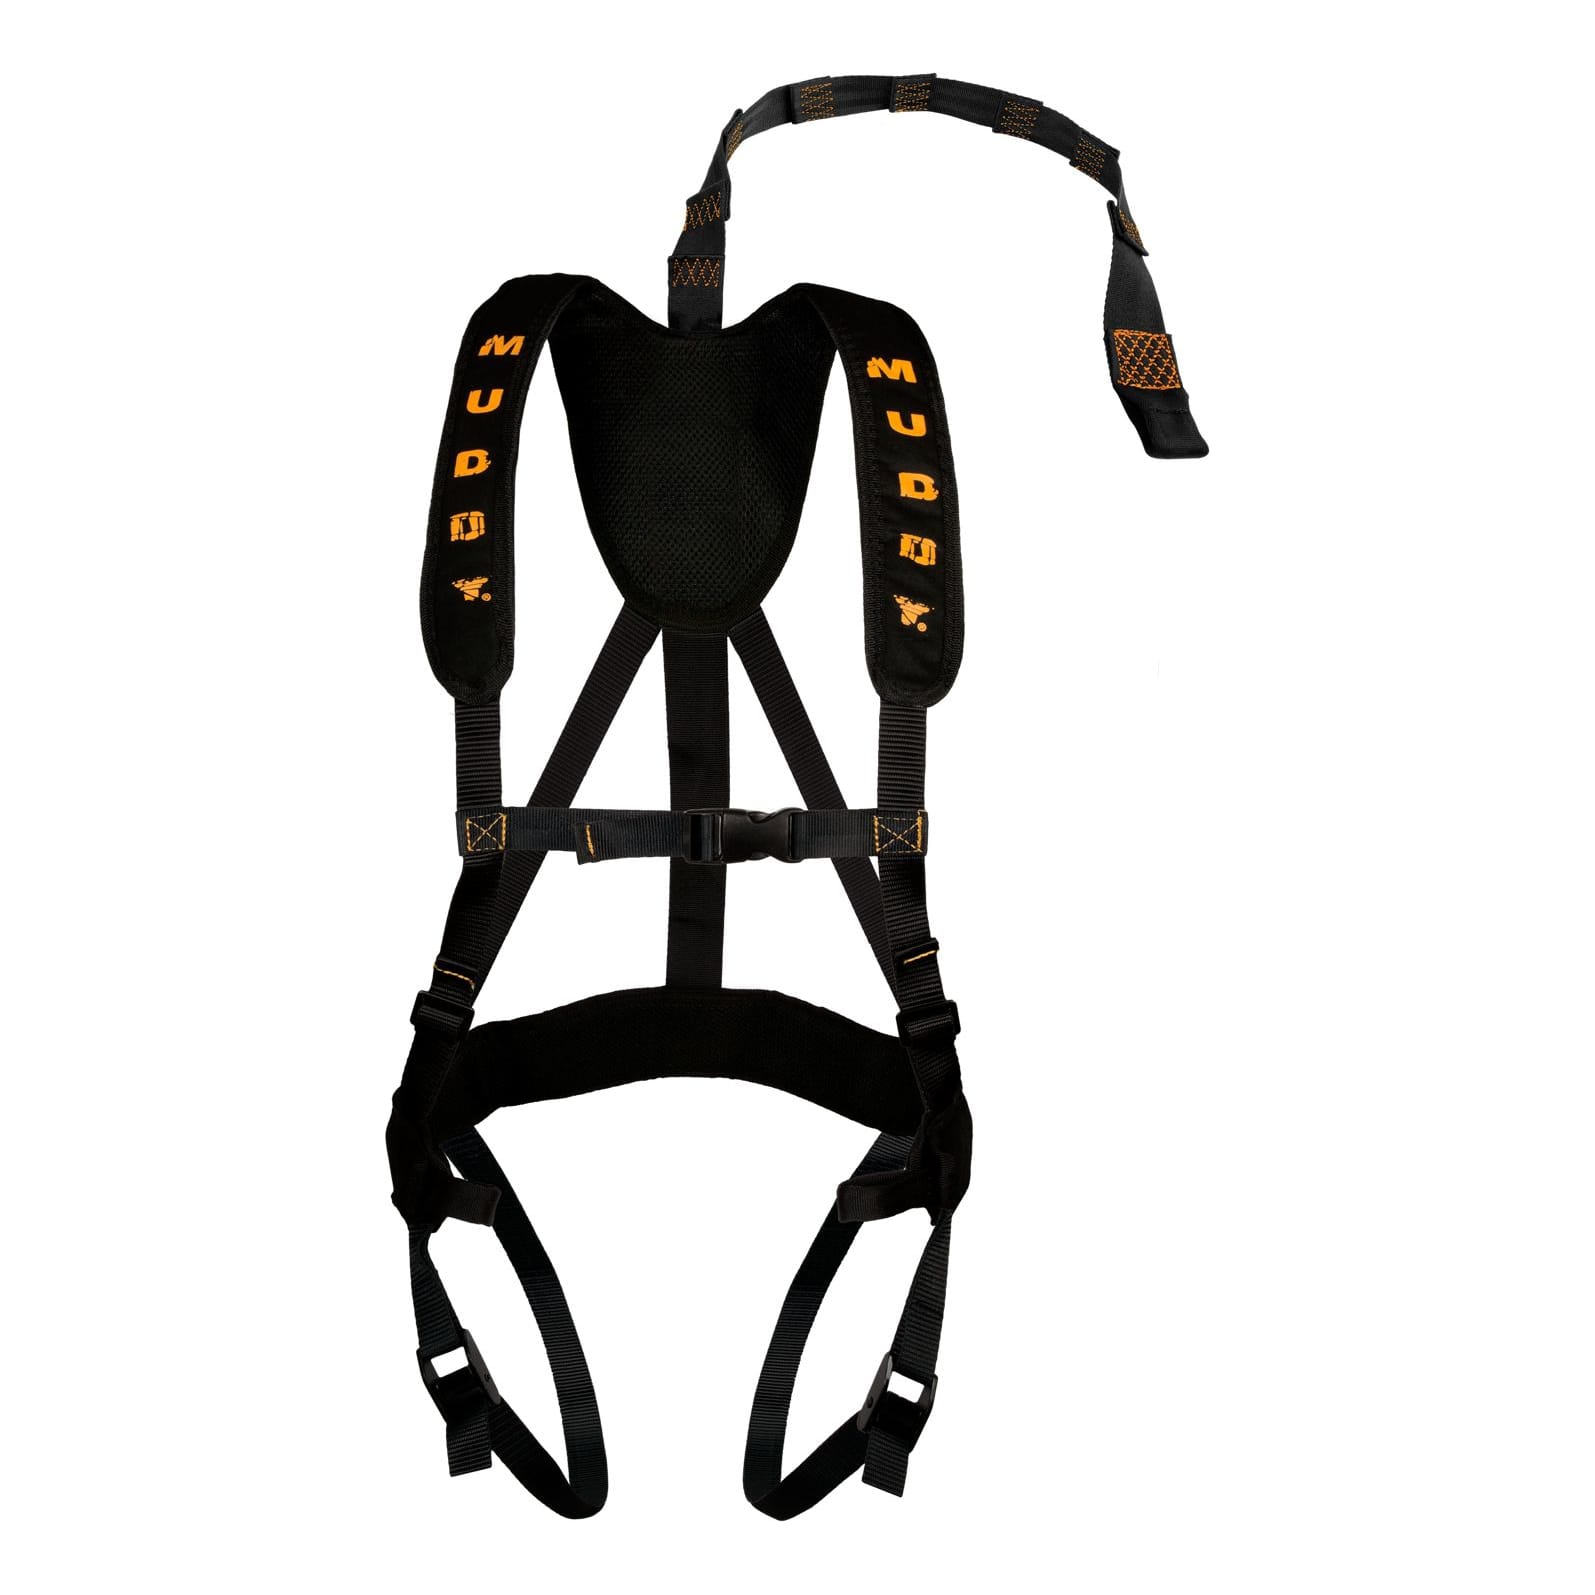 Muddy® The Magnum™ Pro Safety Harness - Black/Orange